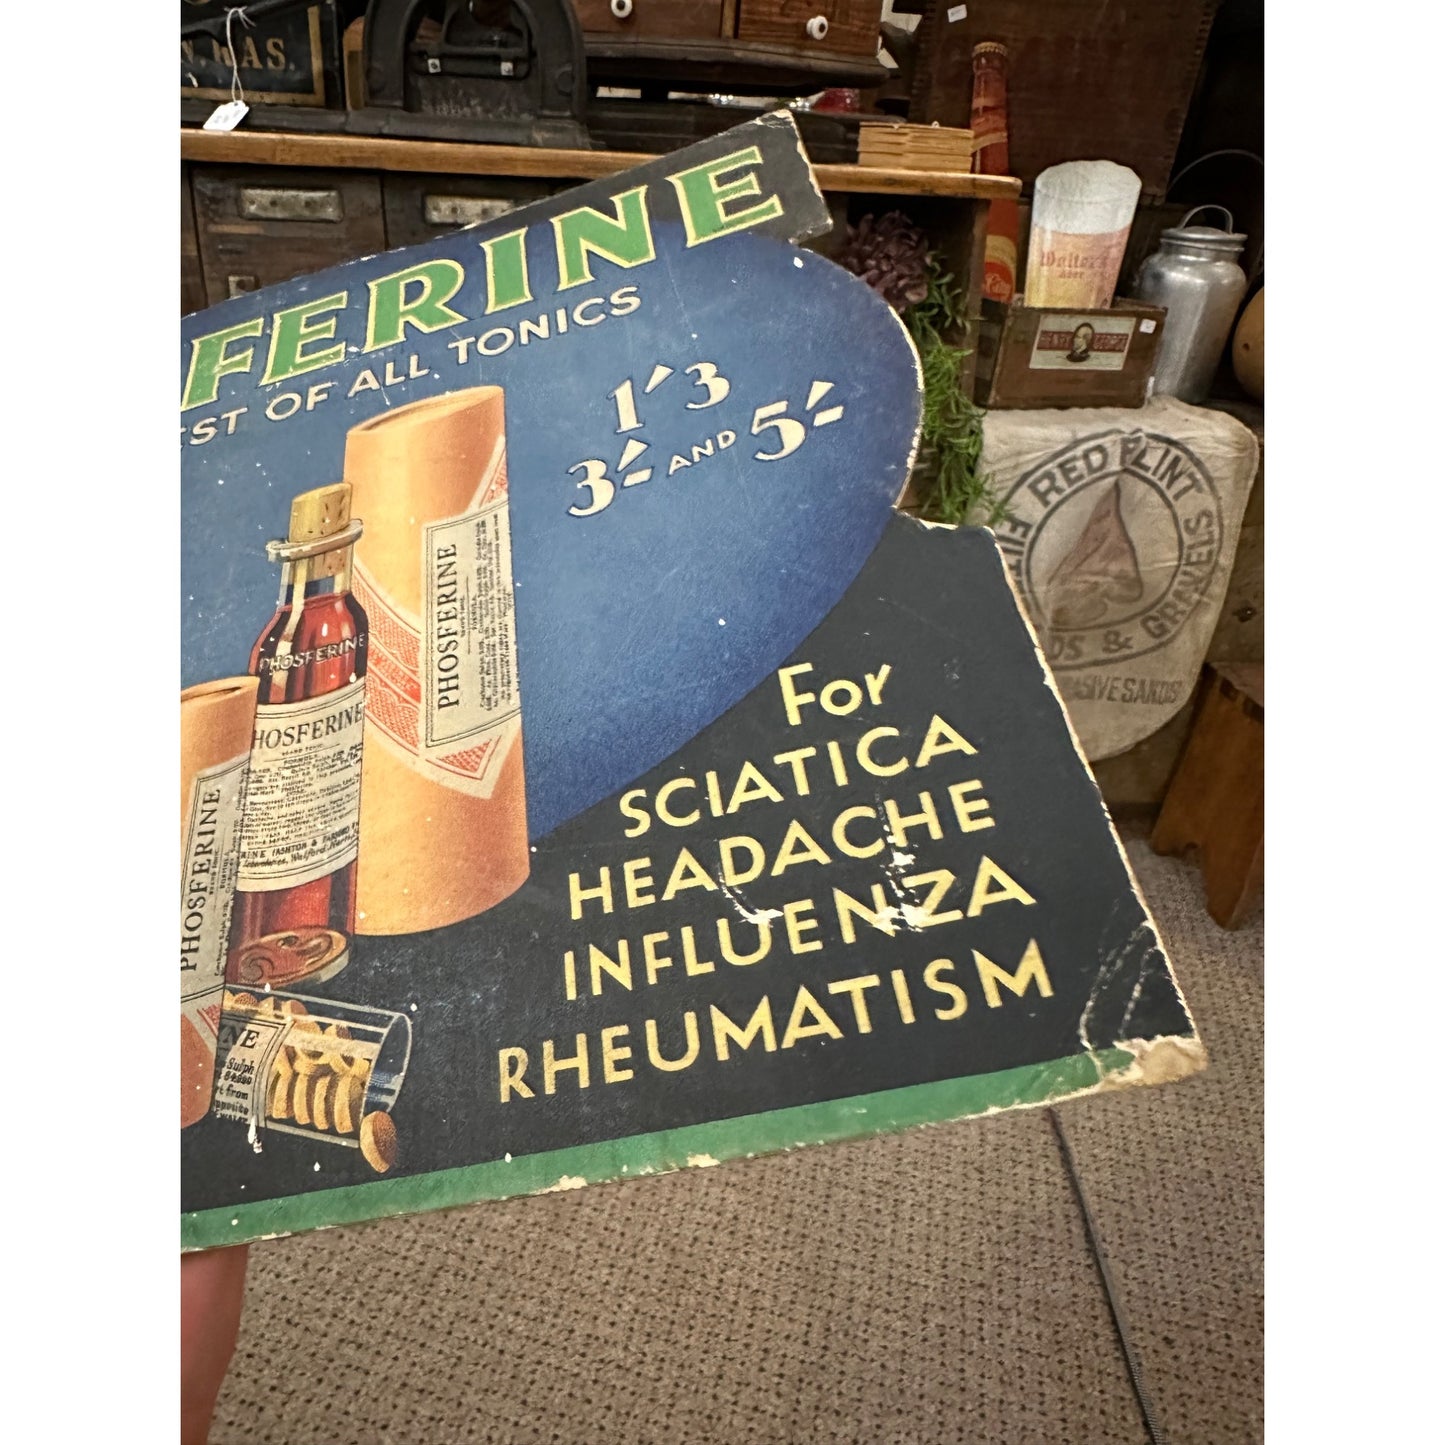 Vintage 1900s Phosferine Tonic Medicine Advertising Litho Sign Cardboard